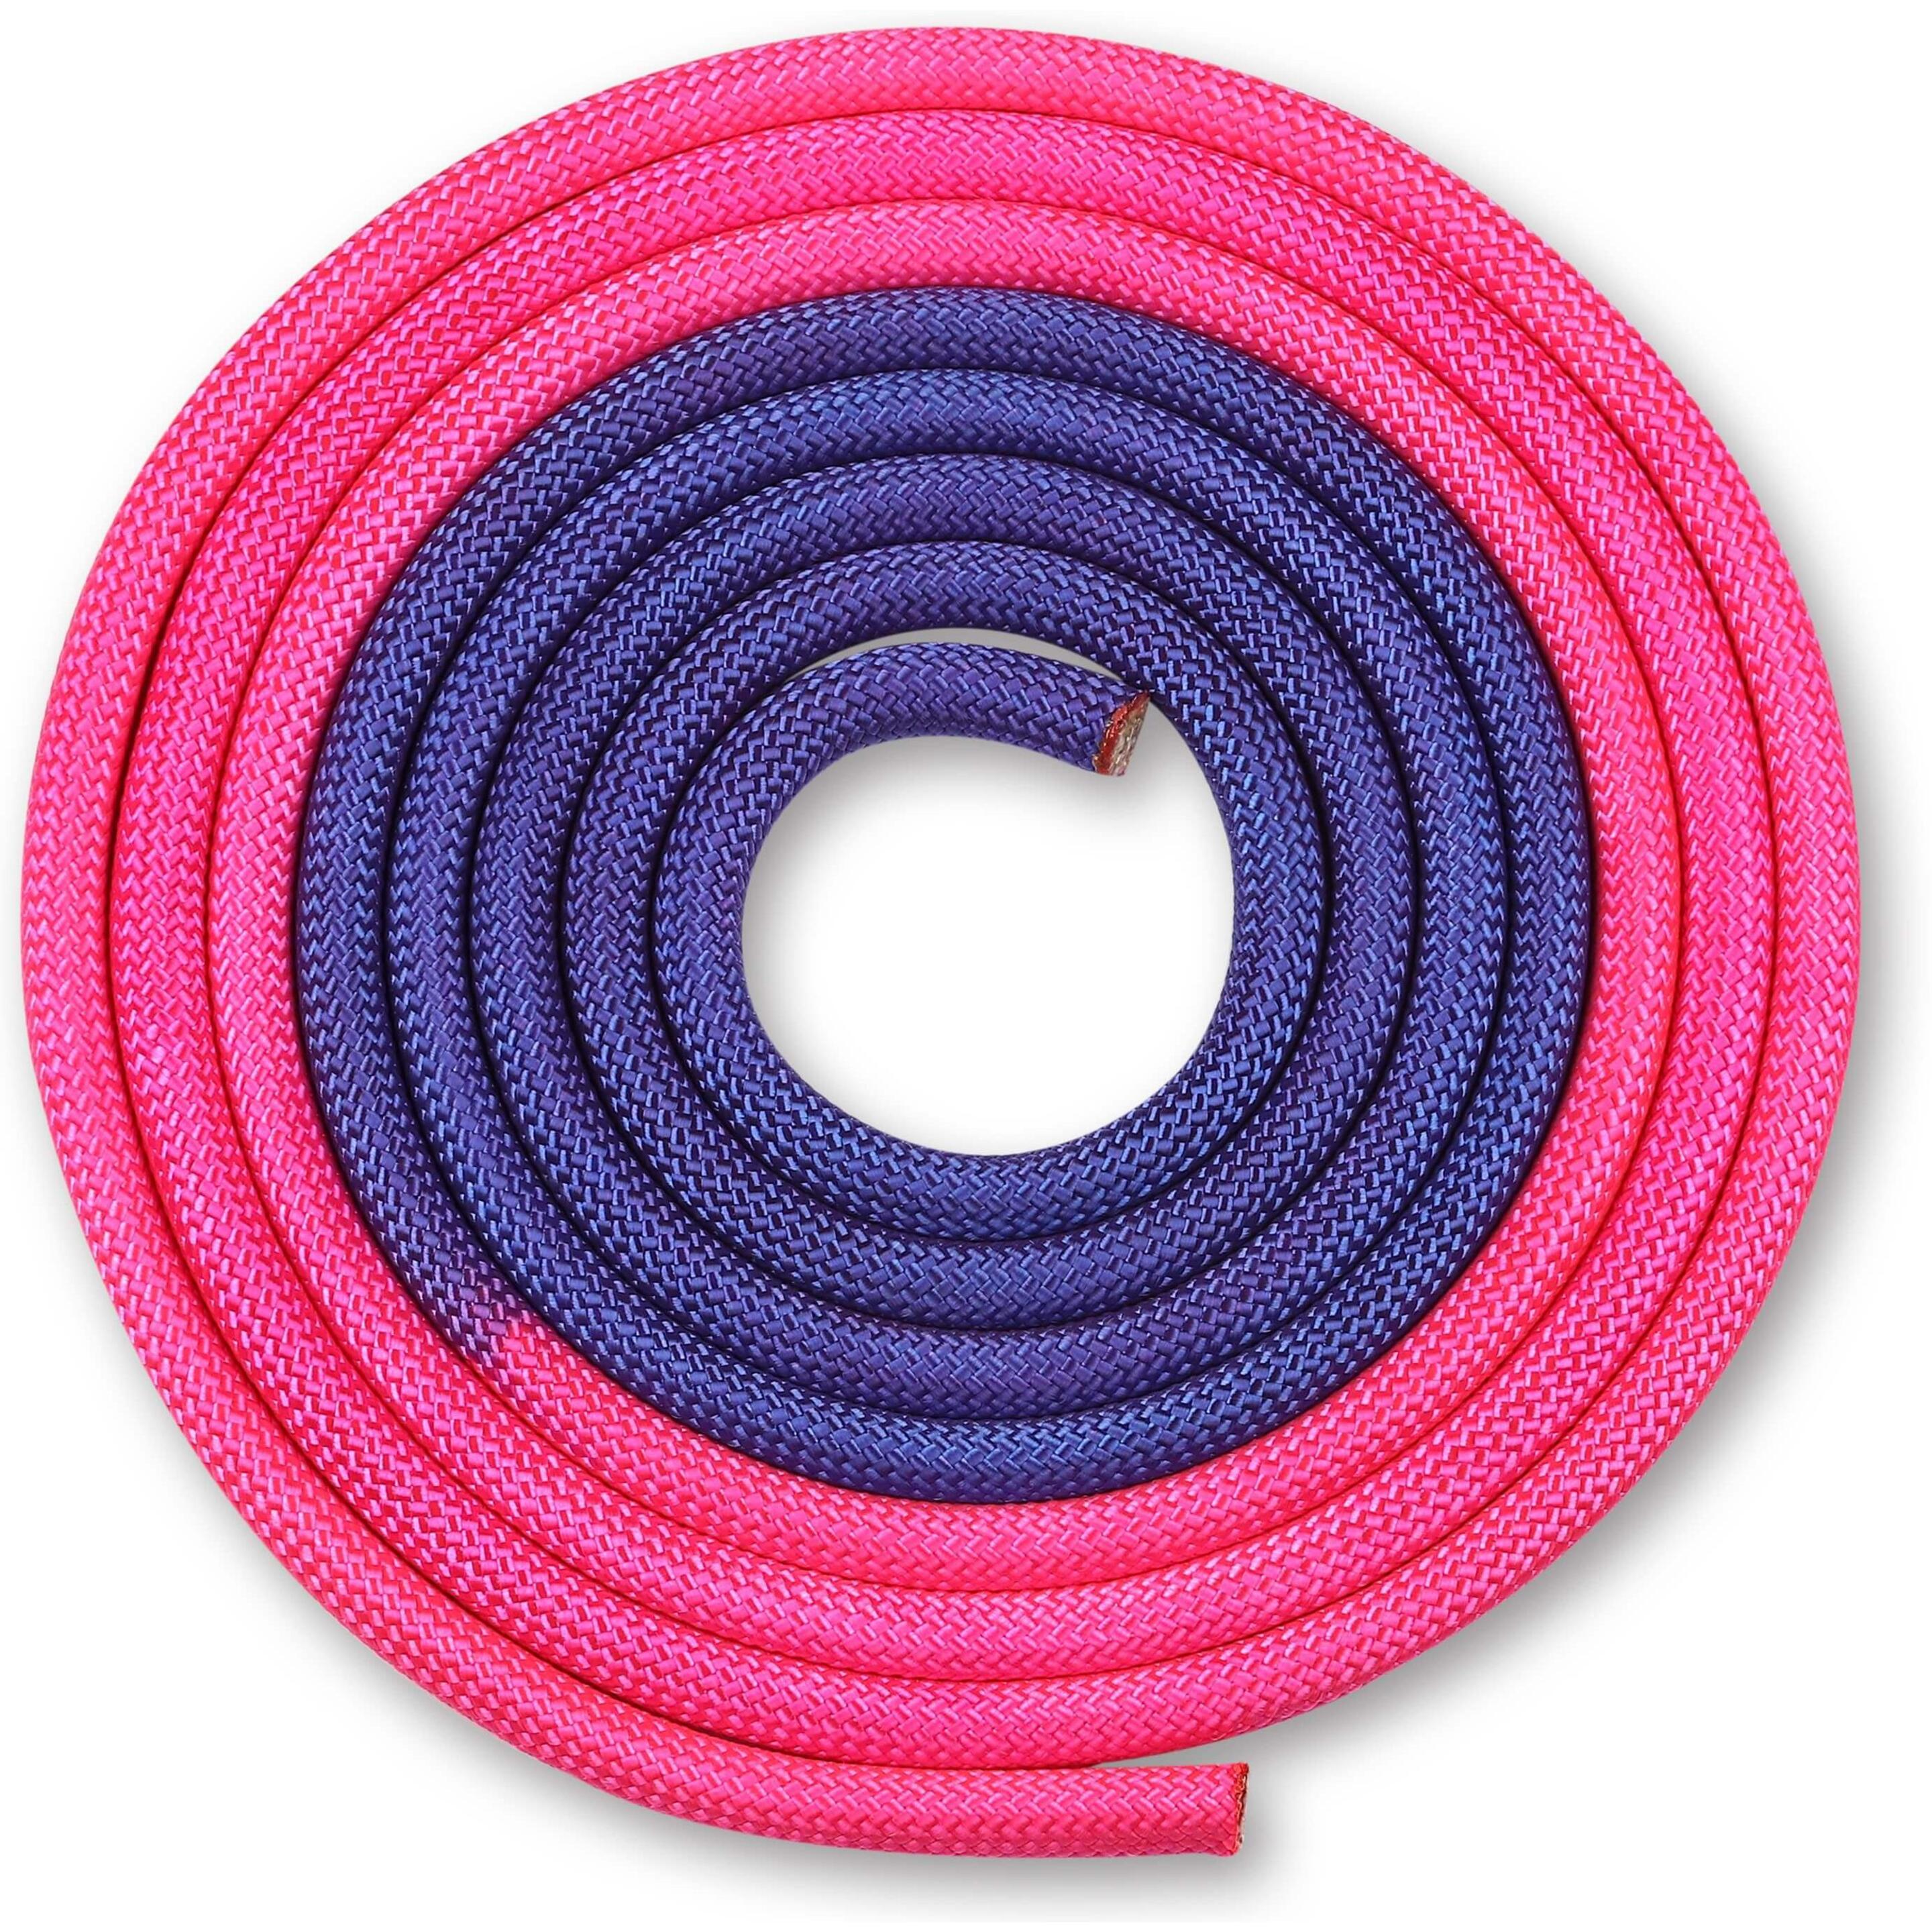 Cuerda Para Gimnasia Rítmica Ponderada 165g Indigo Bicolor 3 M - violeta - 